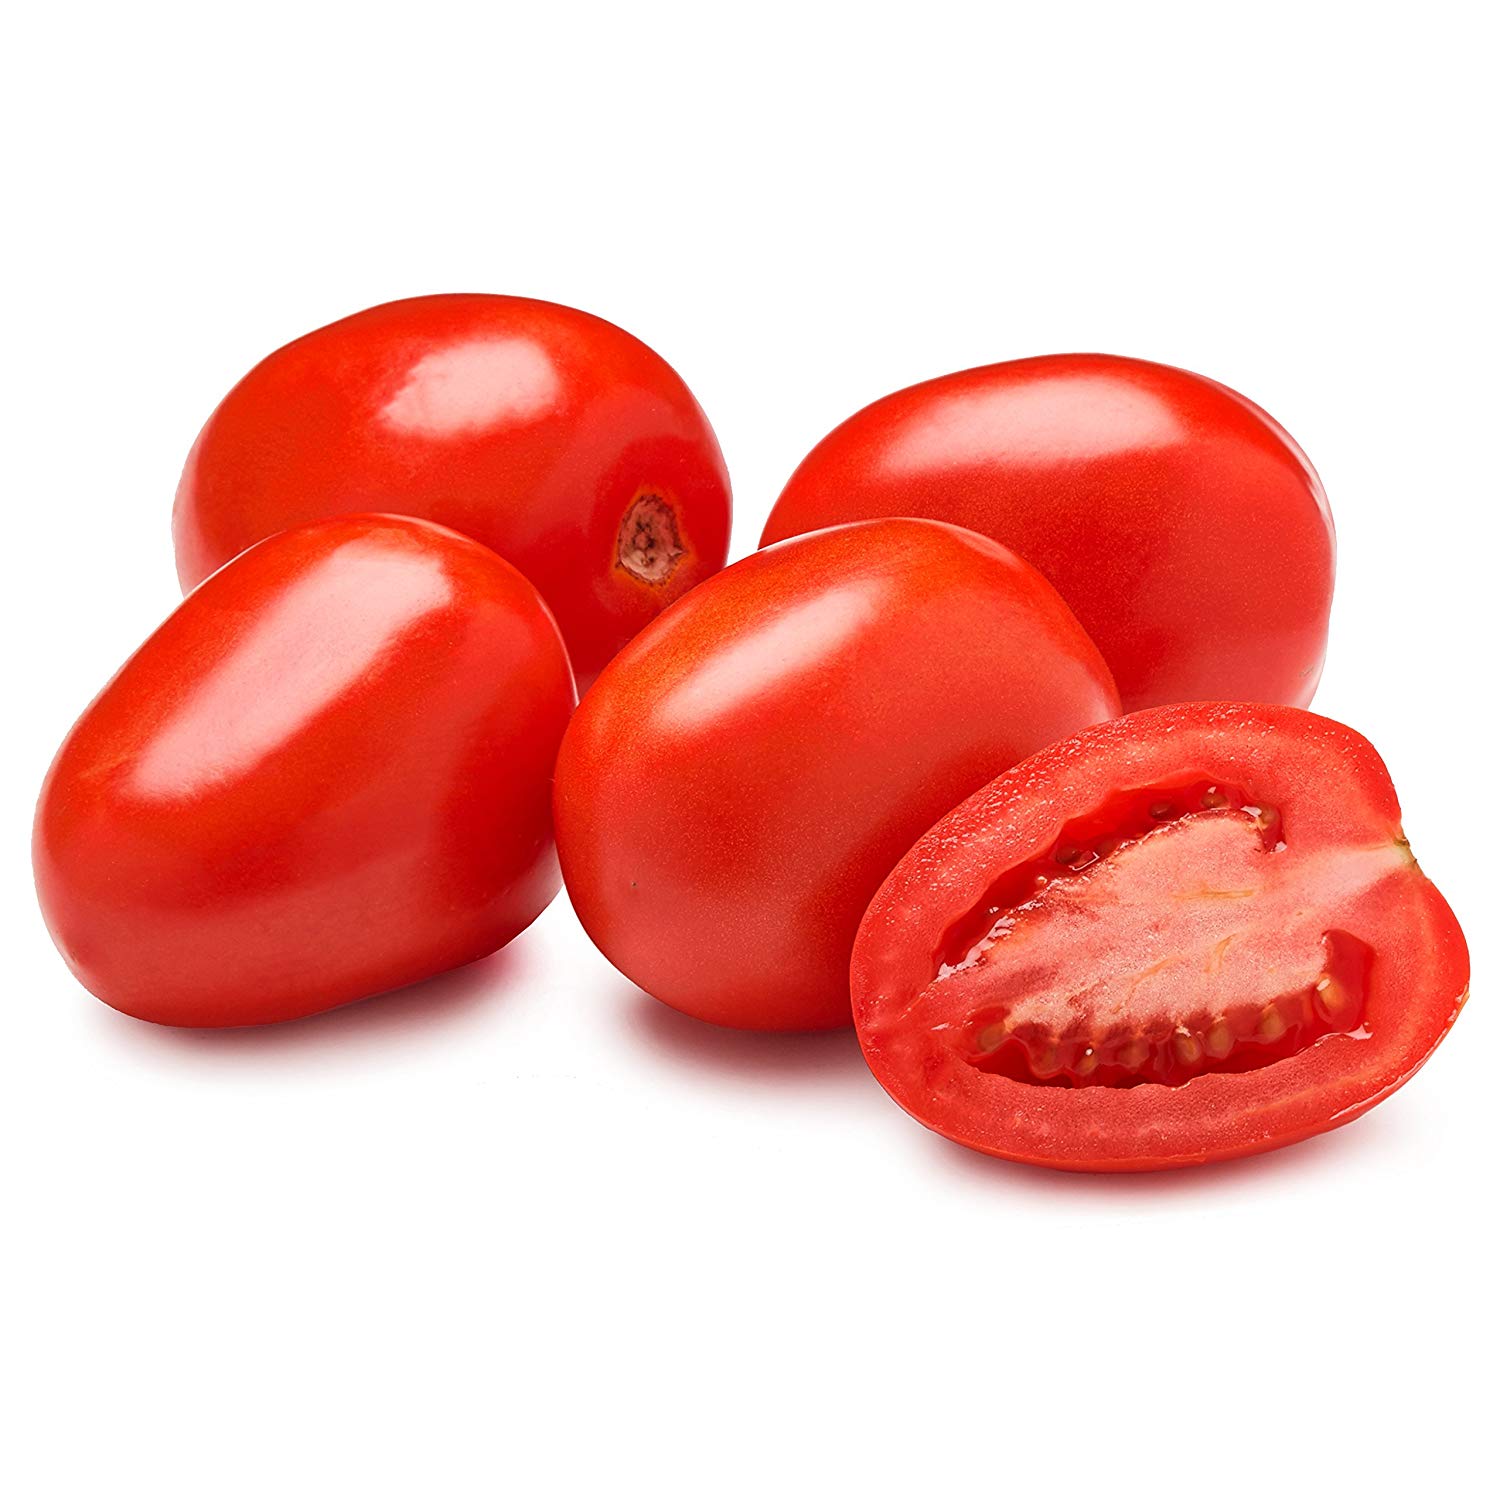 Organic Roma Tomatoes, 1 lb: Amazon.com: Grocery & Gourmet Food. 